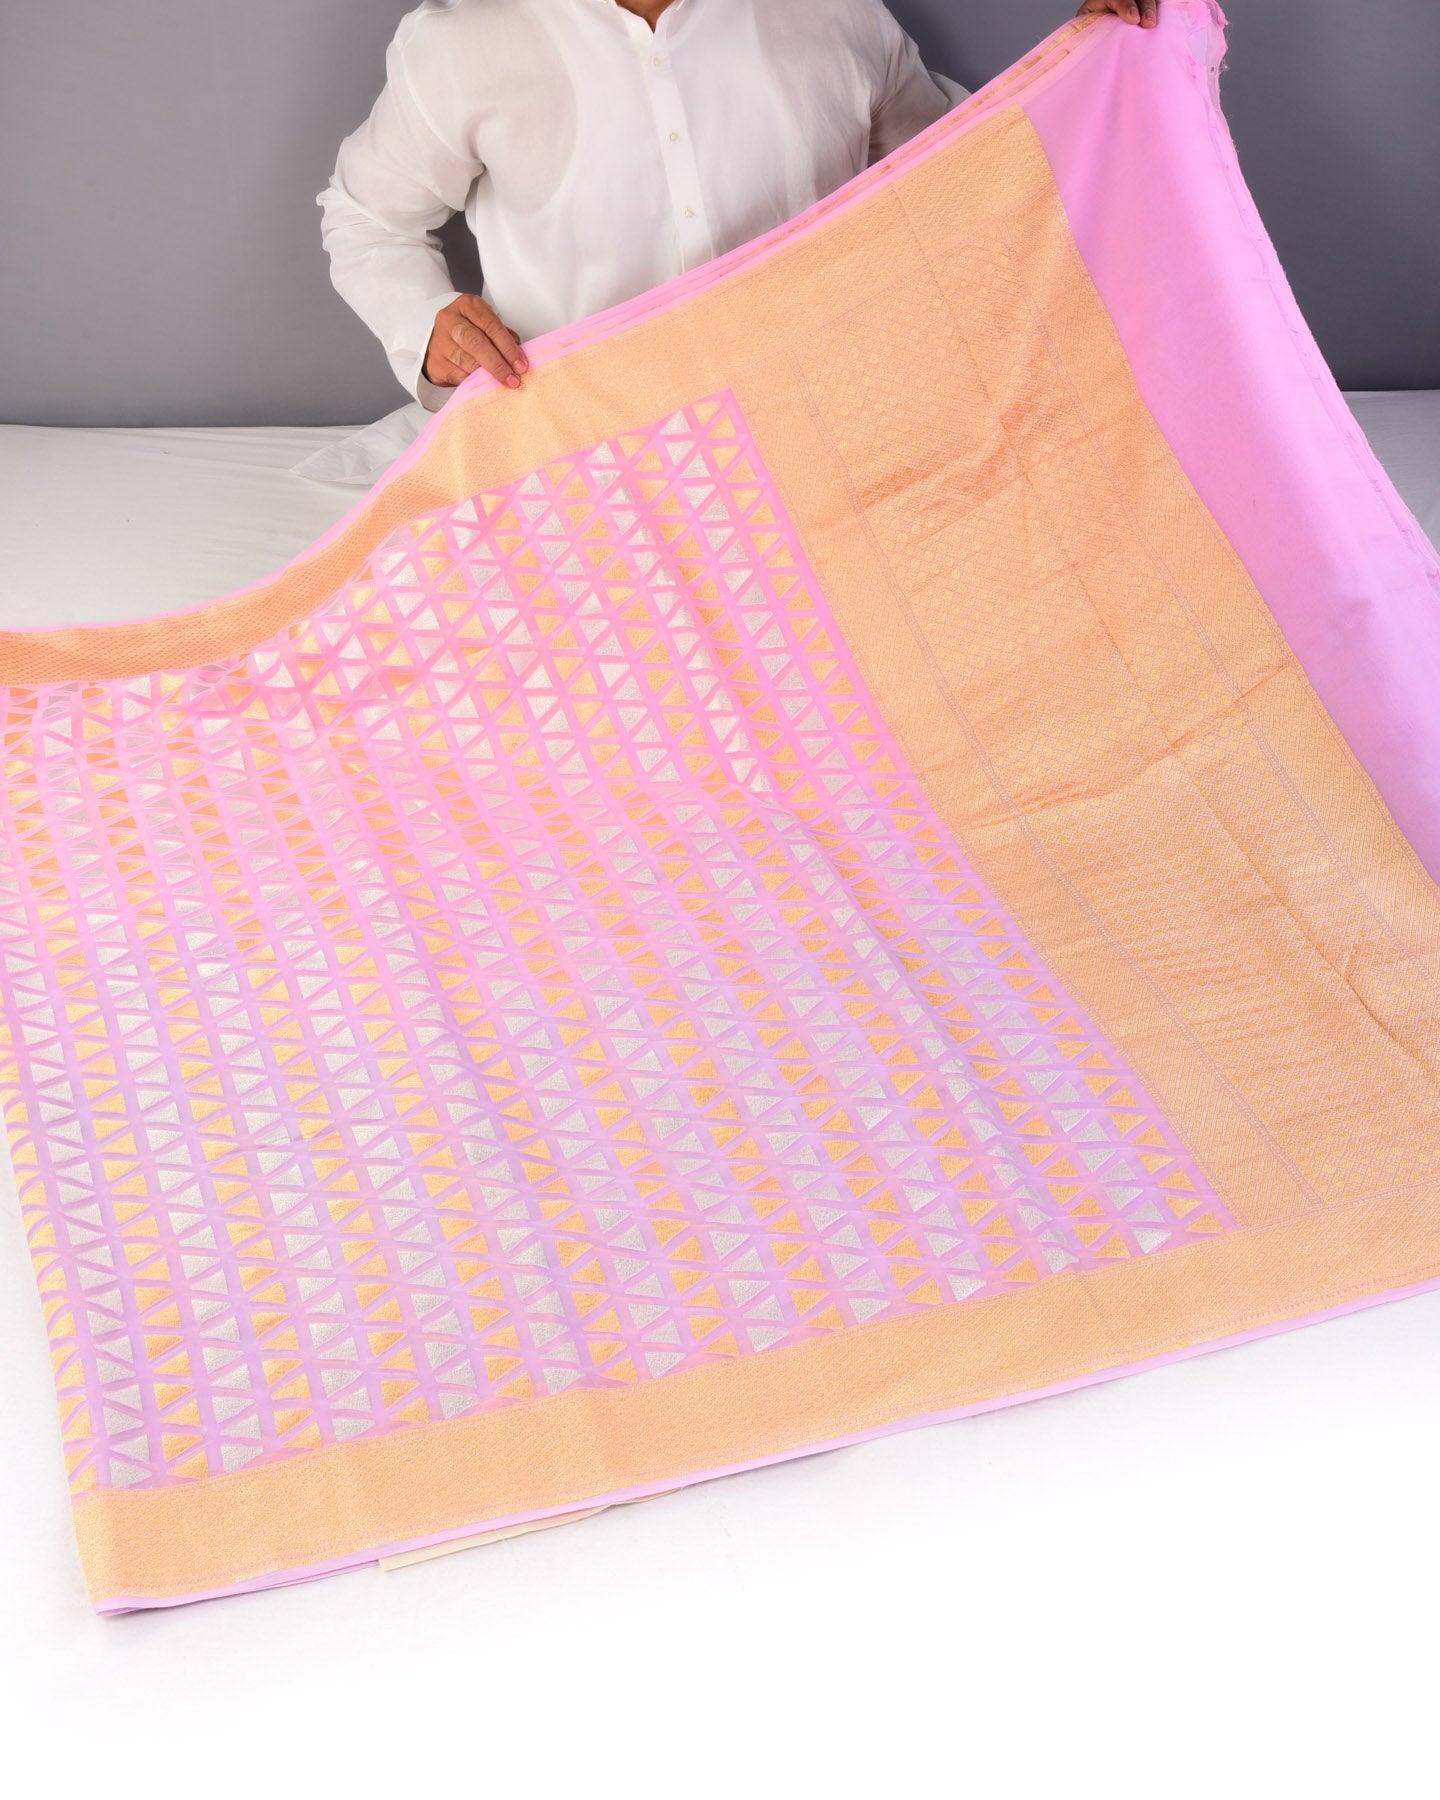 Ombré Mauve Pink Banarasi Sona Rupa Triangles Cutwork Brocade Handwoven Khaddi Georgette Saree - By HolyWeaves, Benares